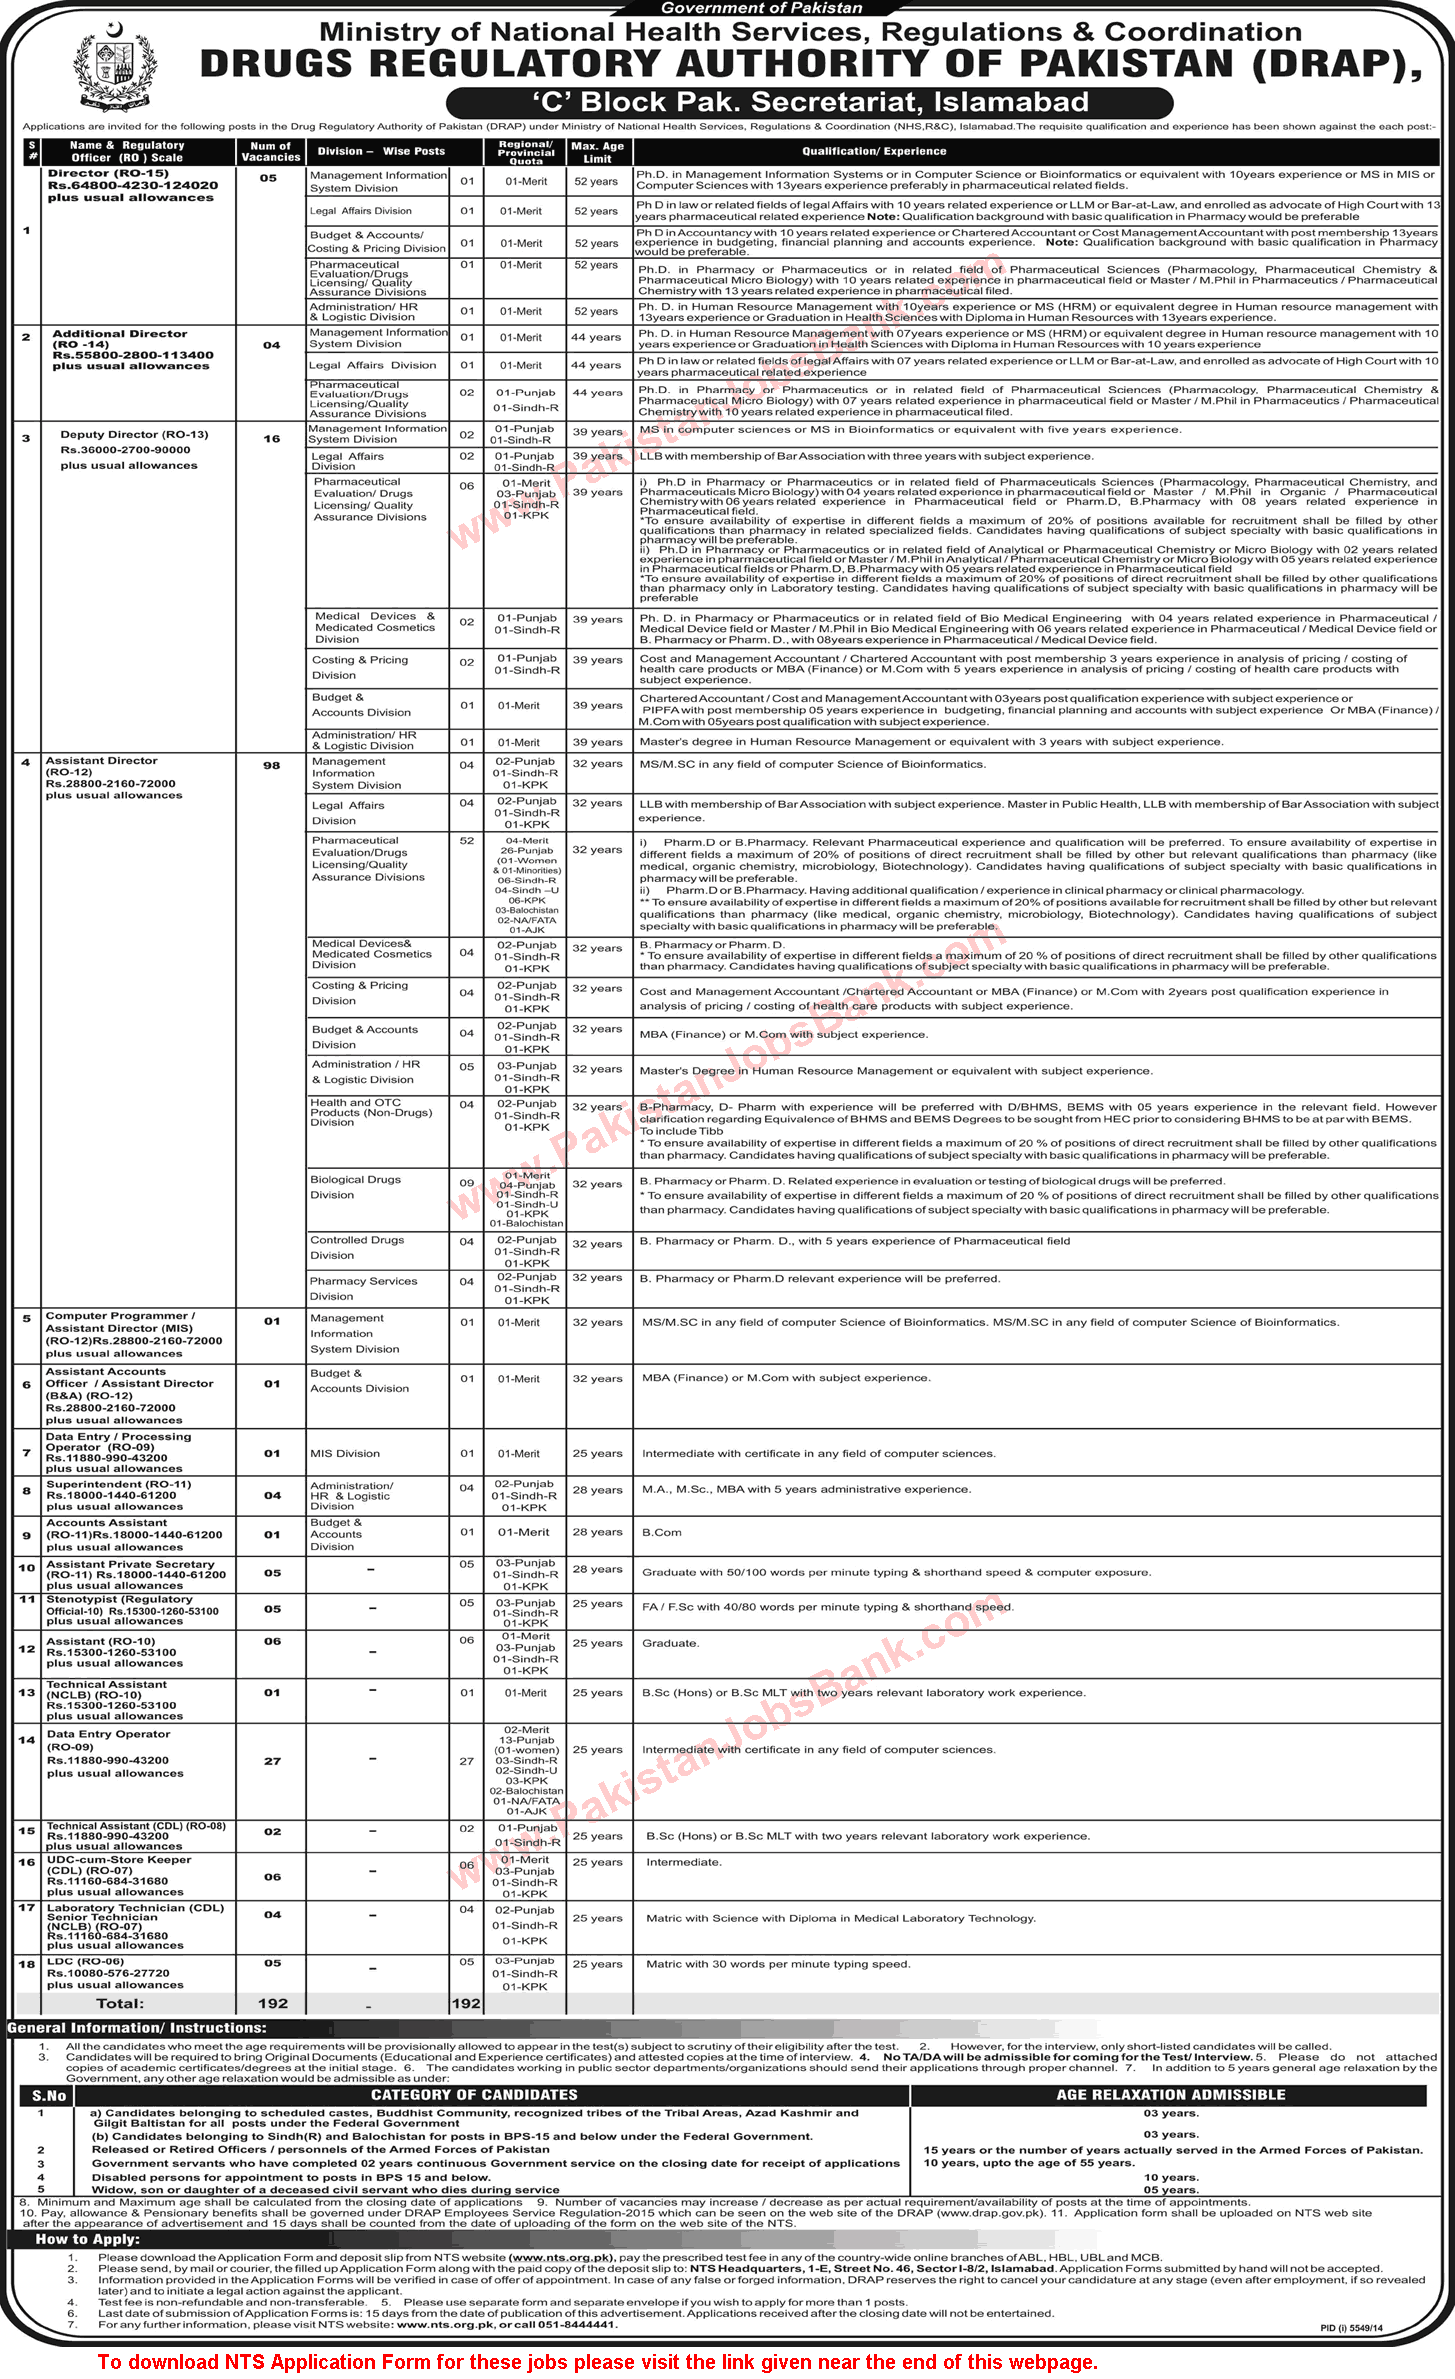 Drug Regulatory Authority of Pakistan Jobs 2015 April NTS Application Form Download DRAP